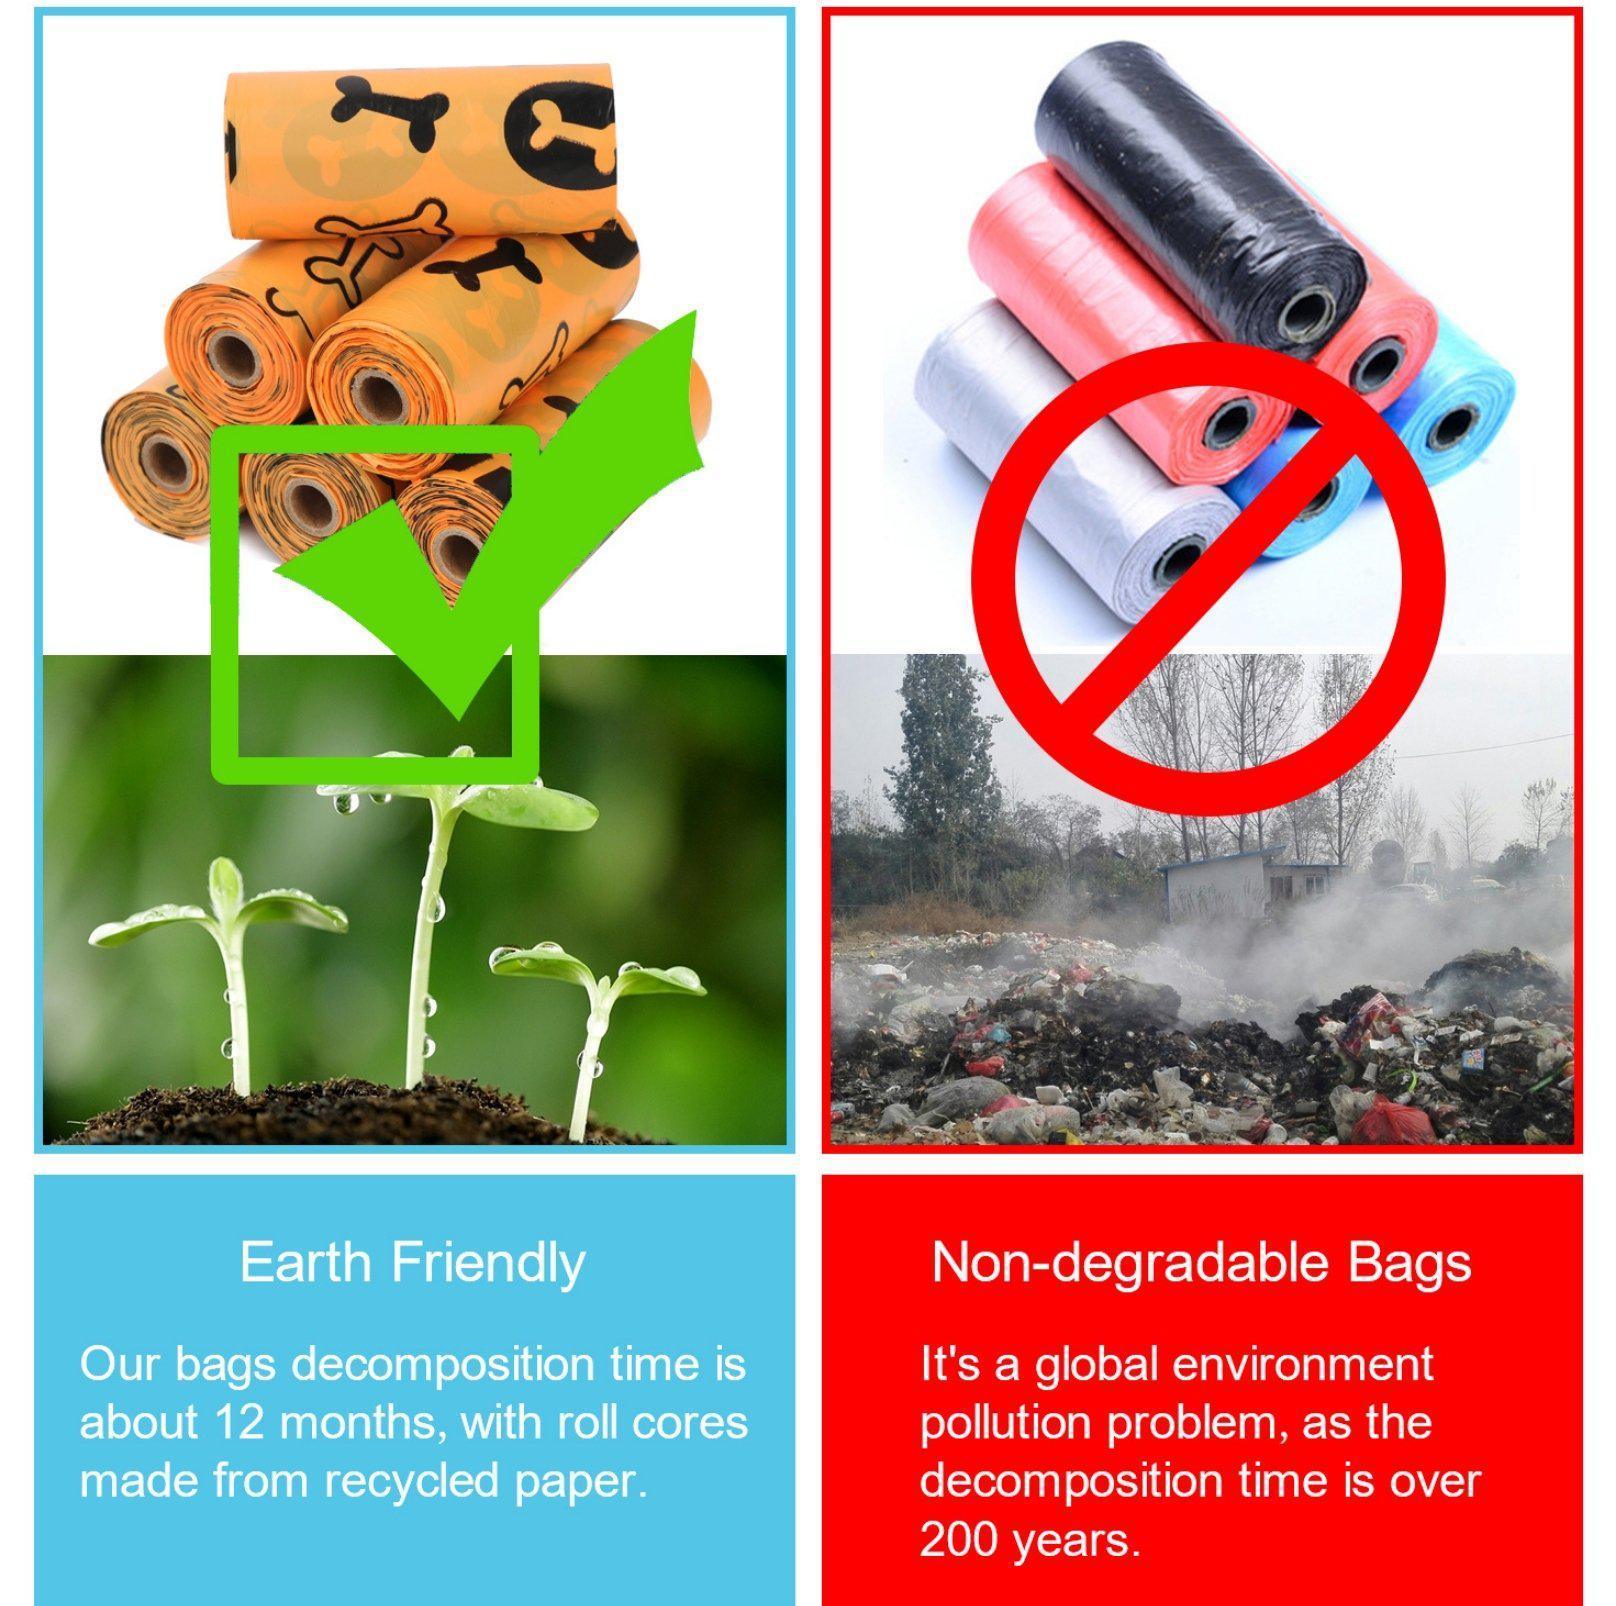 Pet Waste Bag (poop bag) 8 Rolls EPI Biodegradable - {{product.type}} - PawPawUp